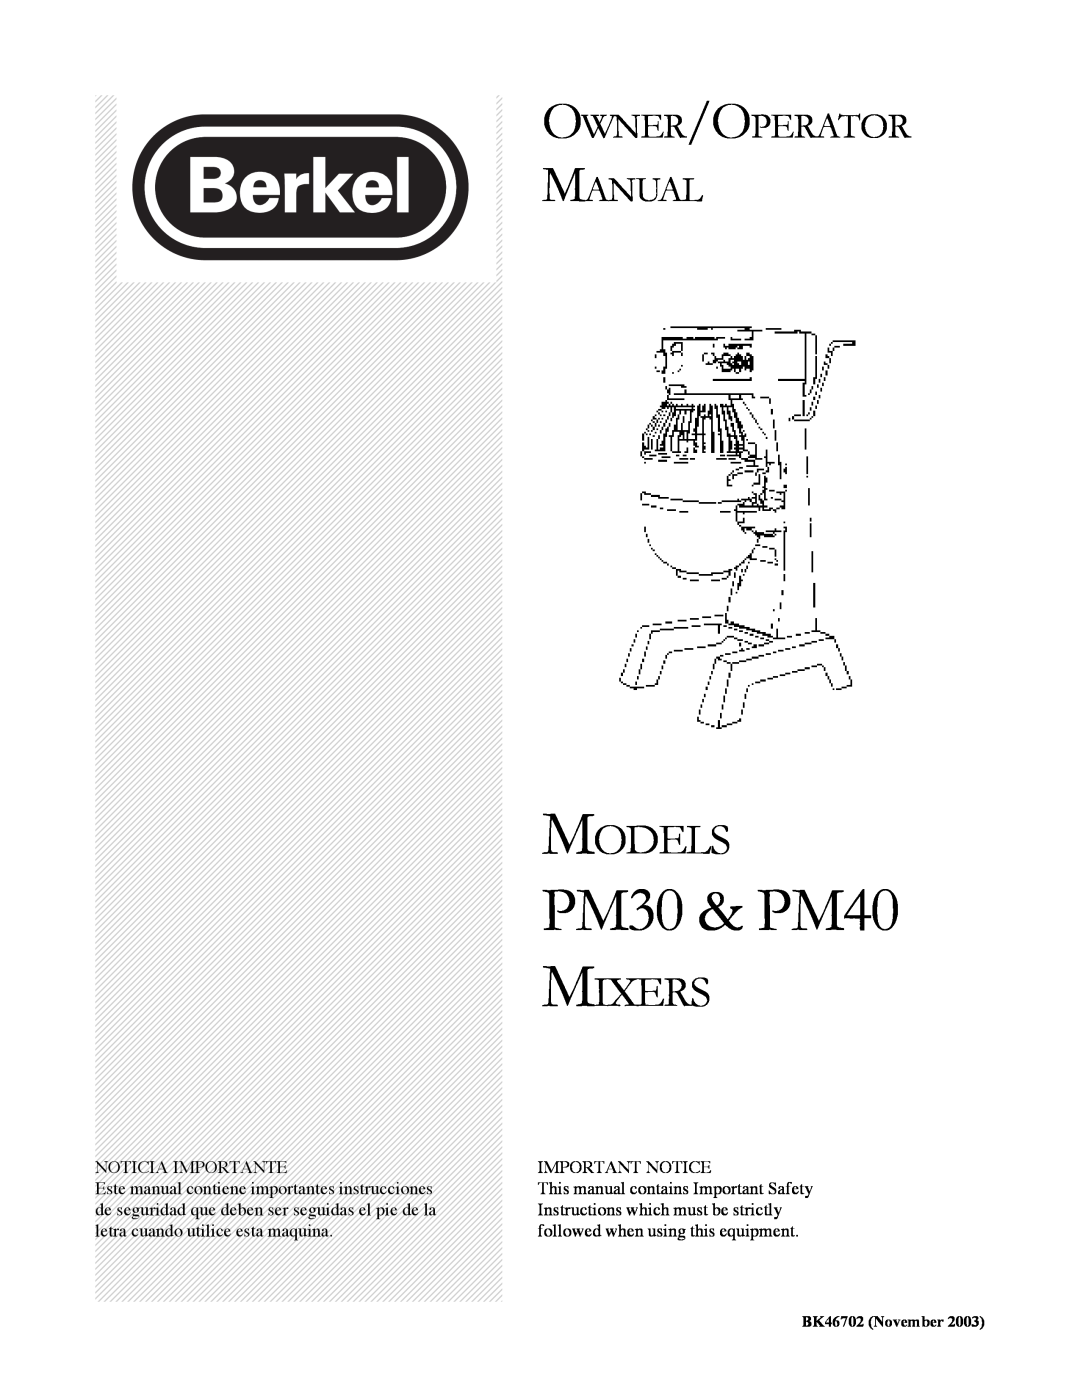 Berkel PM30, PM40 important safety instructions 30 30, 02/6, 0,56, 215235$725 0$18$, BK46702 November 